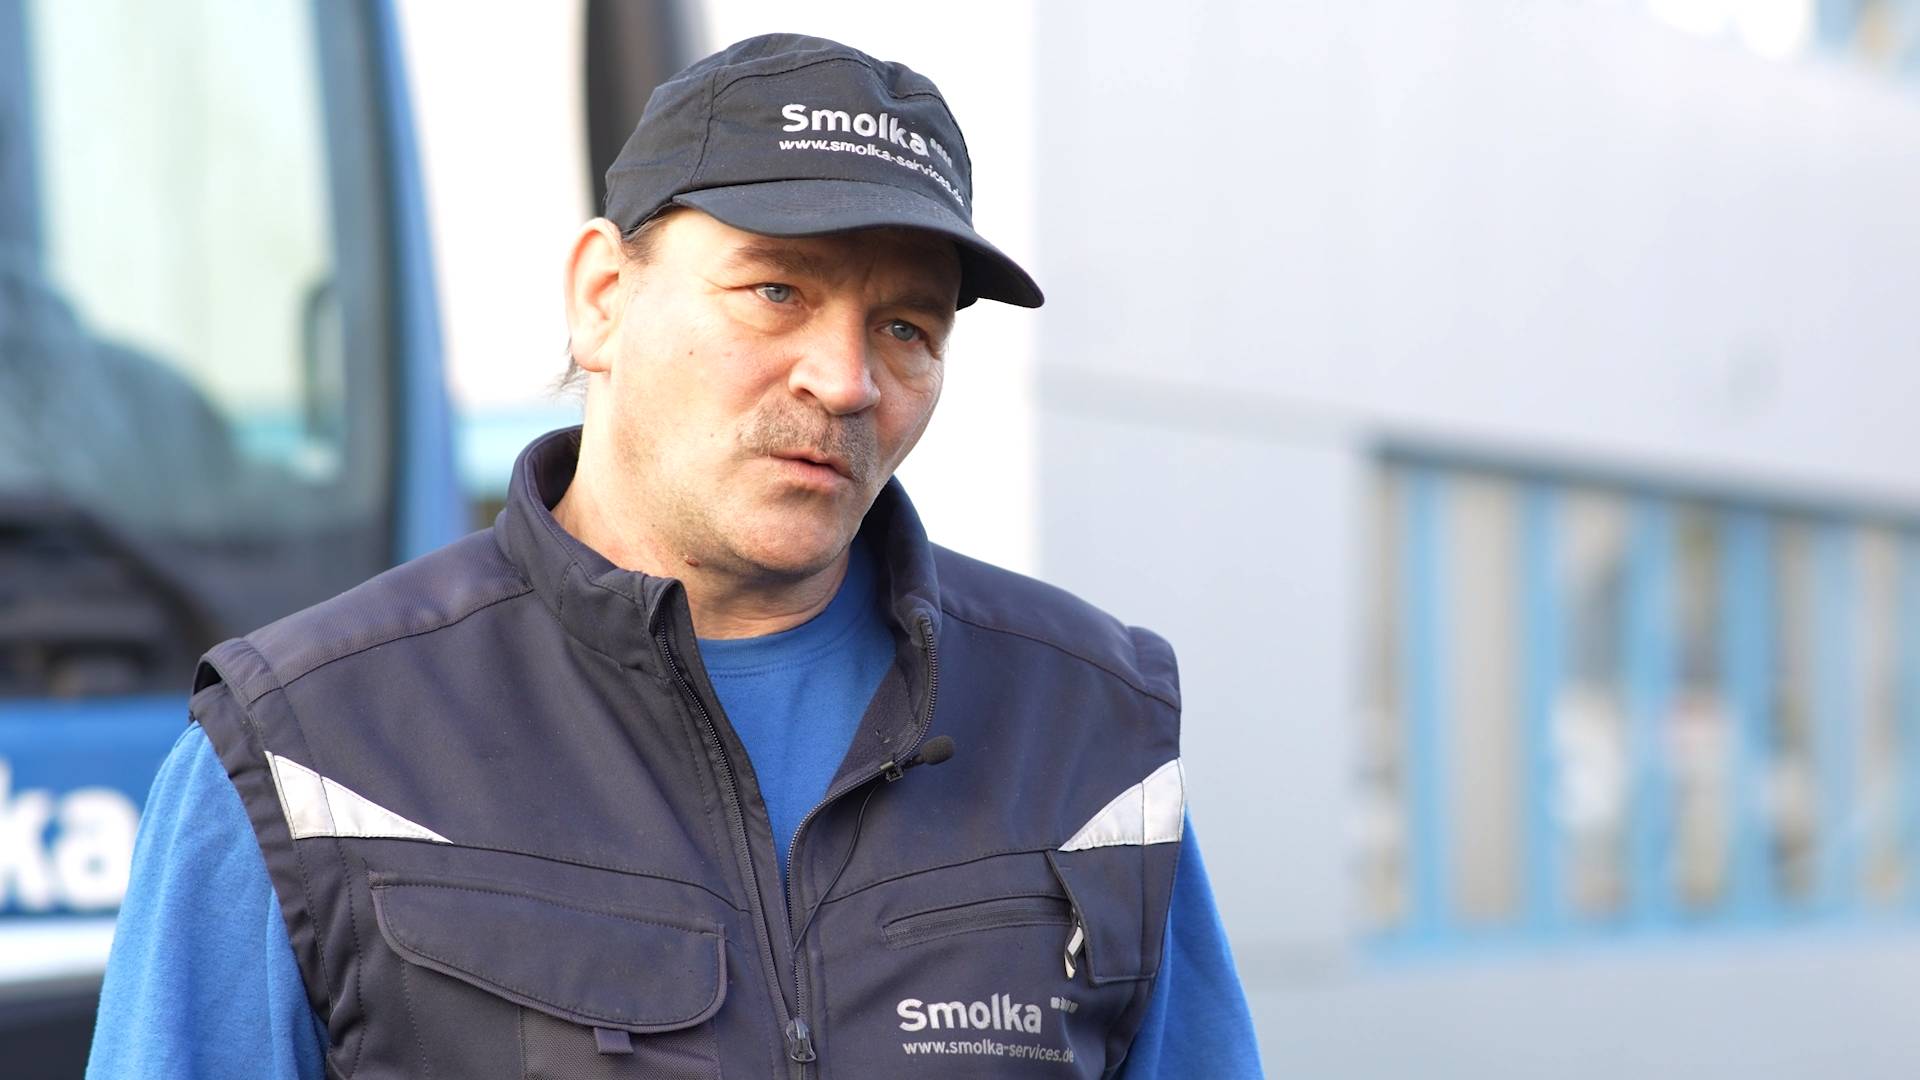 Smolka GmbH & Co. KG